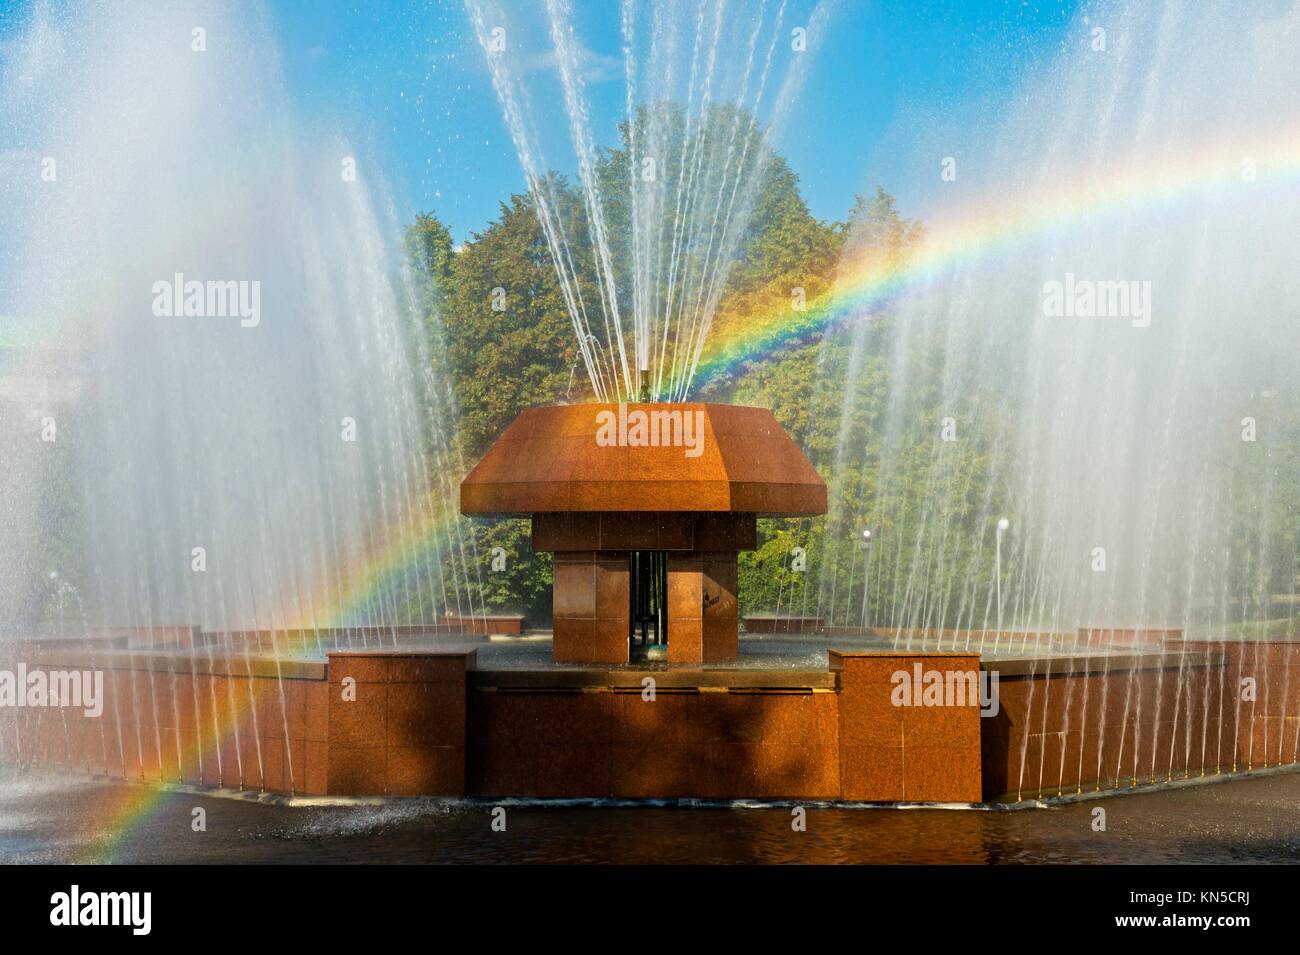 Rainbow in the waterdrops of a fountain, Almaty, Kazakhstan. Stock Photo